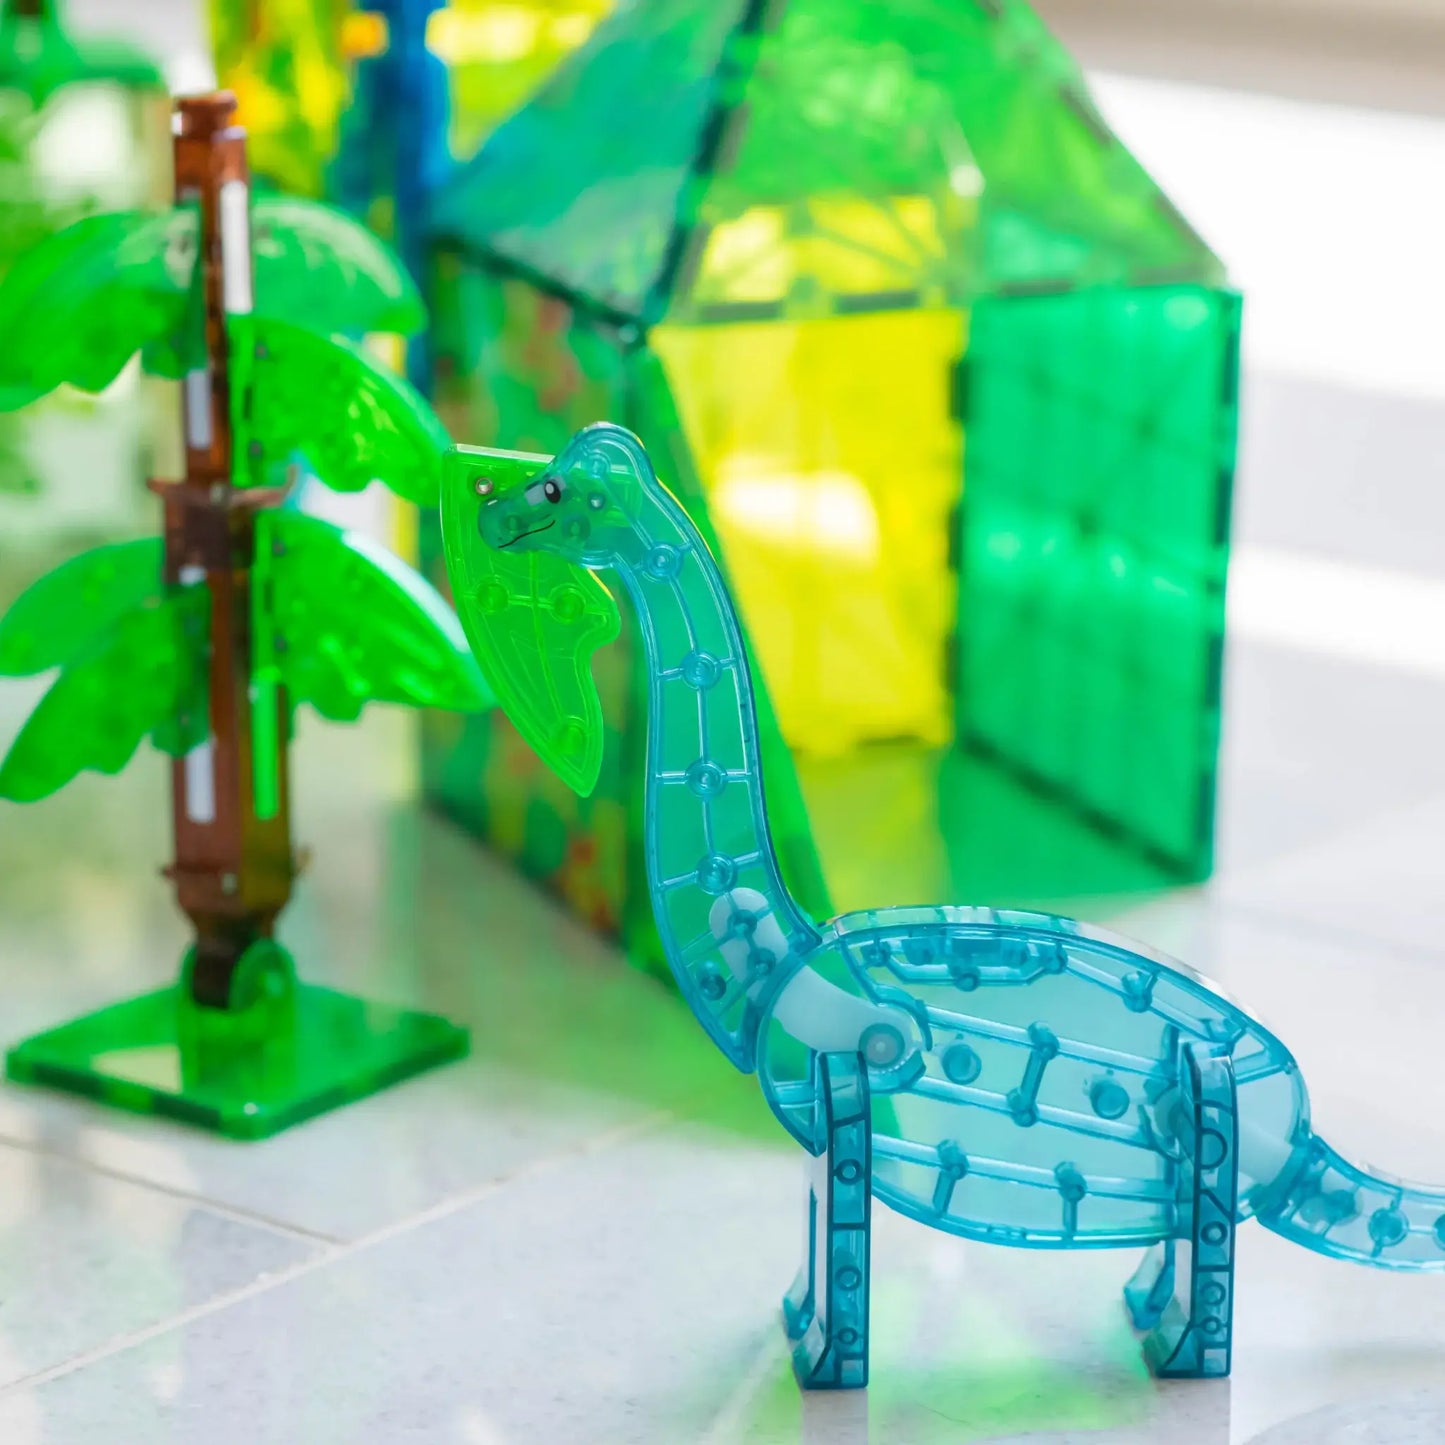 Dino World XL Magna Tiles 50-Piece Set